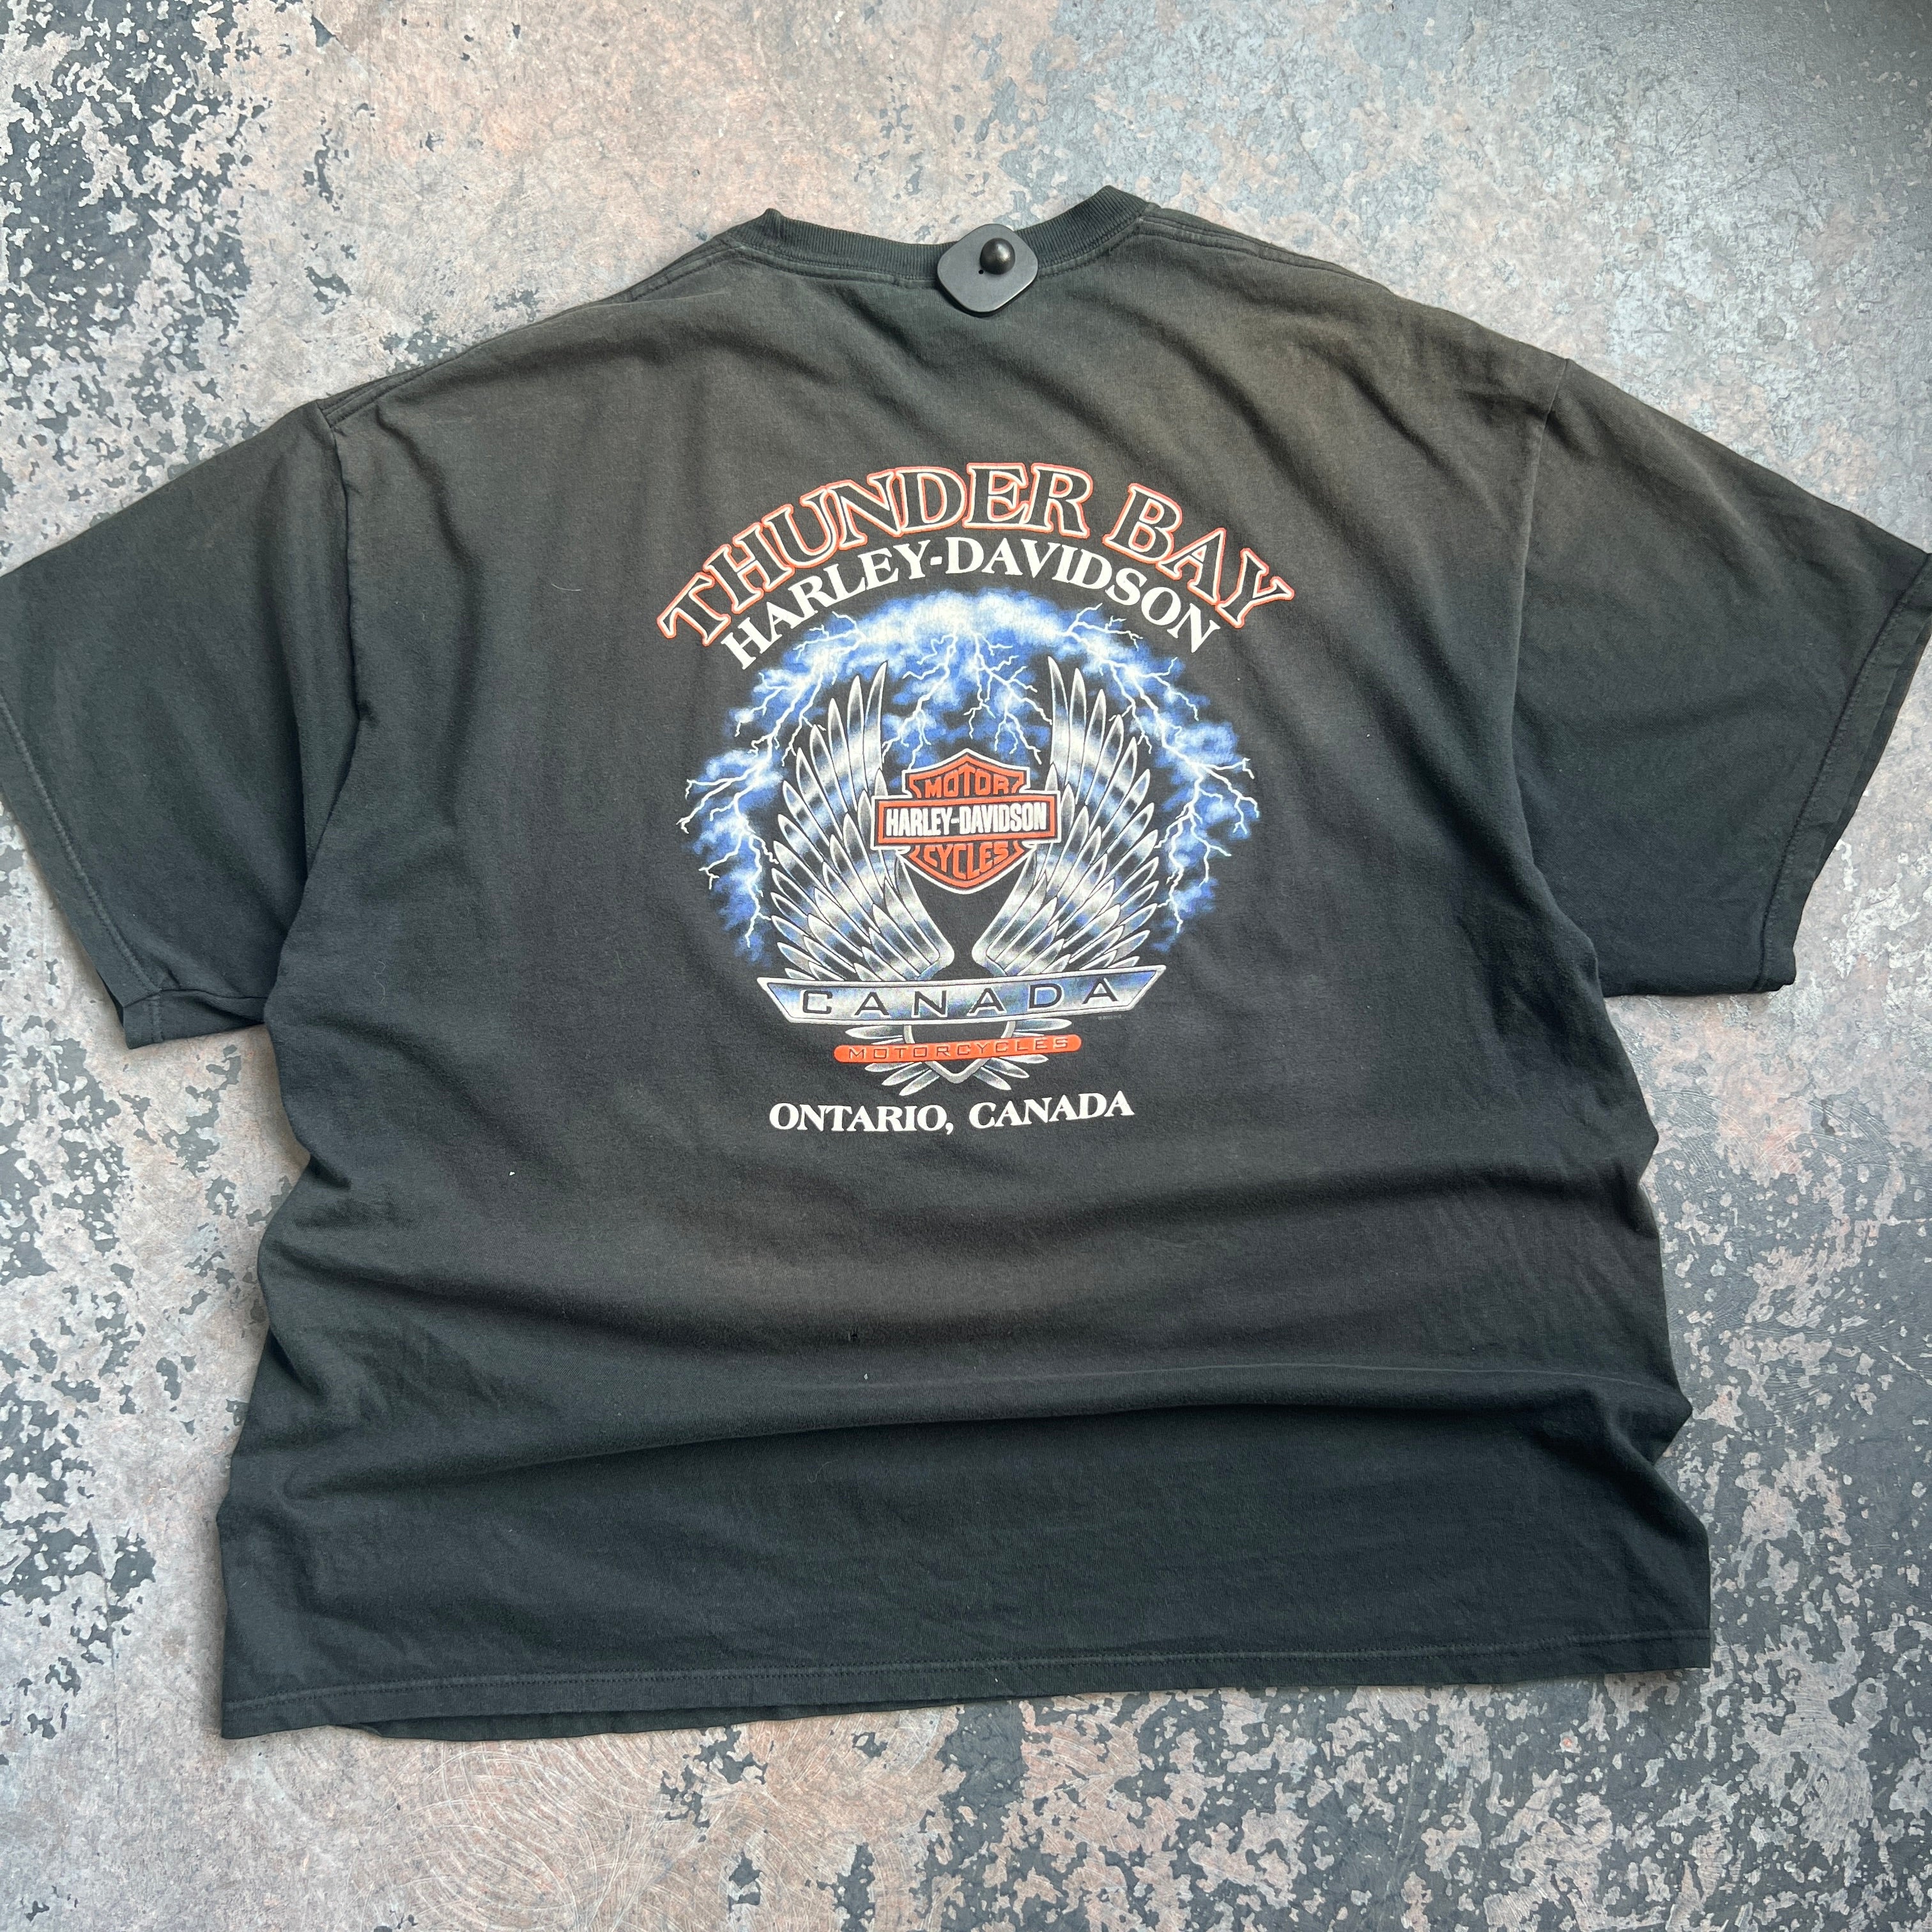 Harley Davidson "Still Wild" T-Shirt